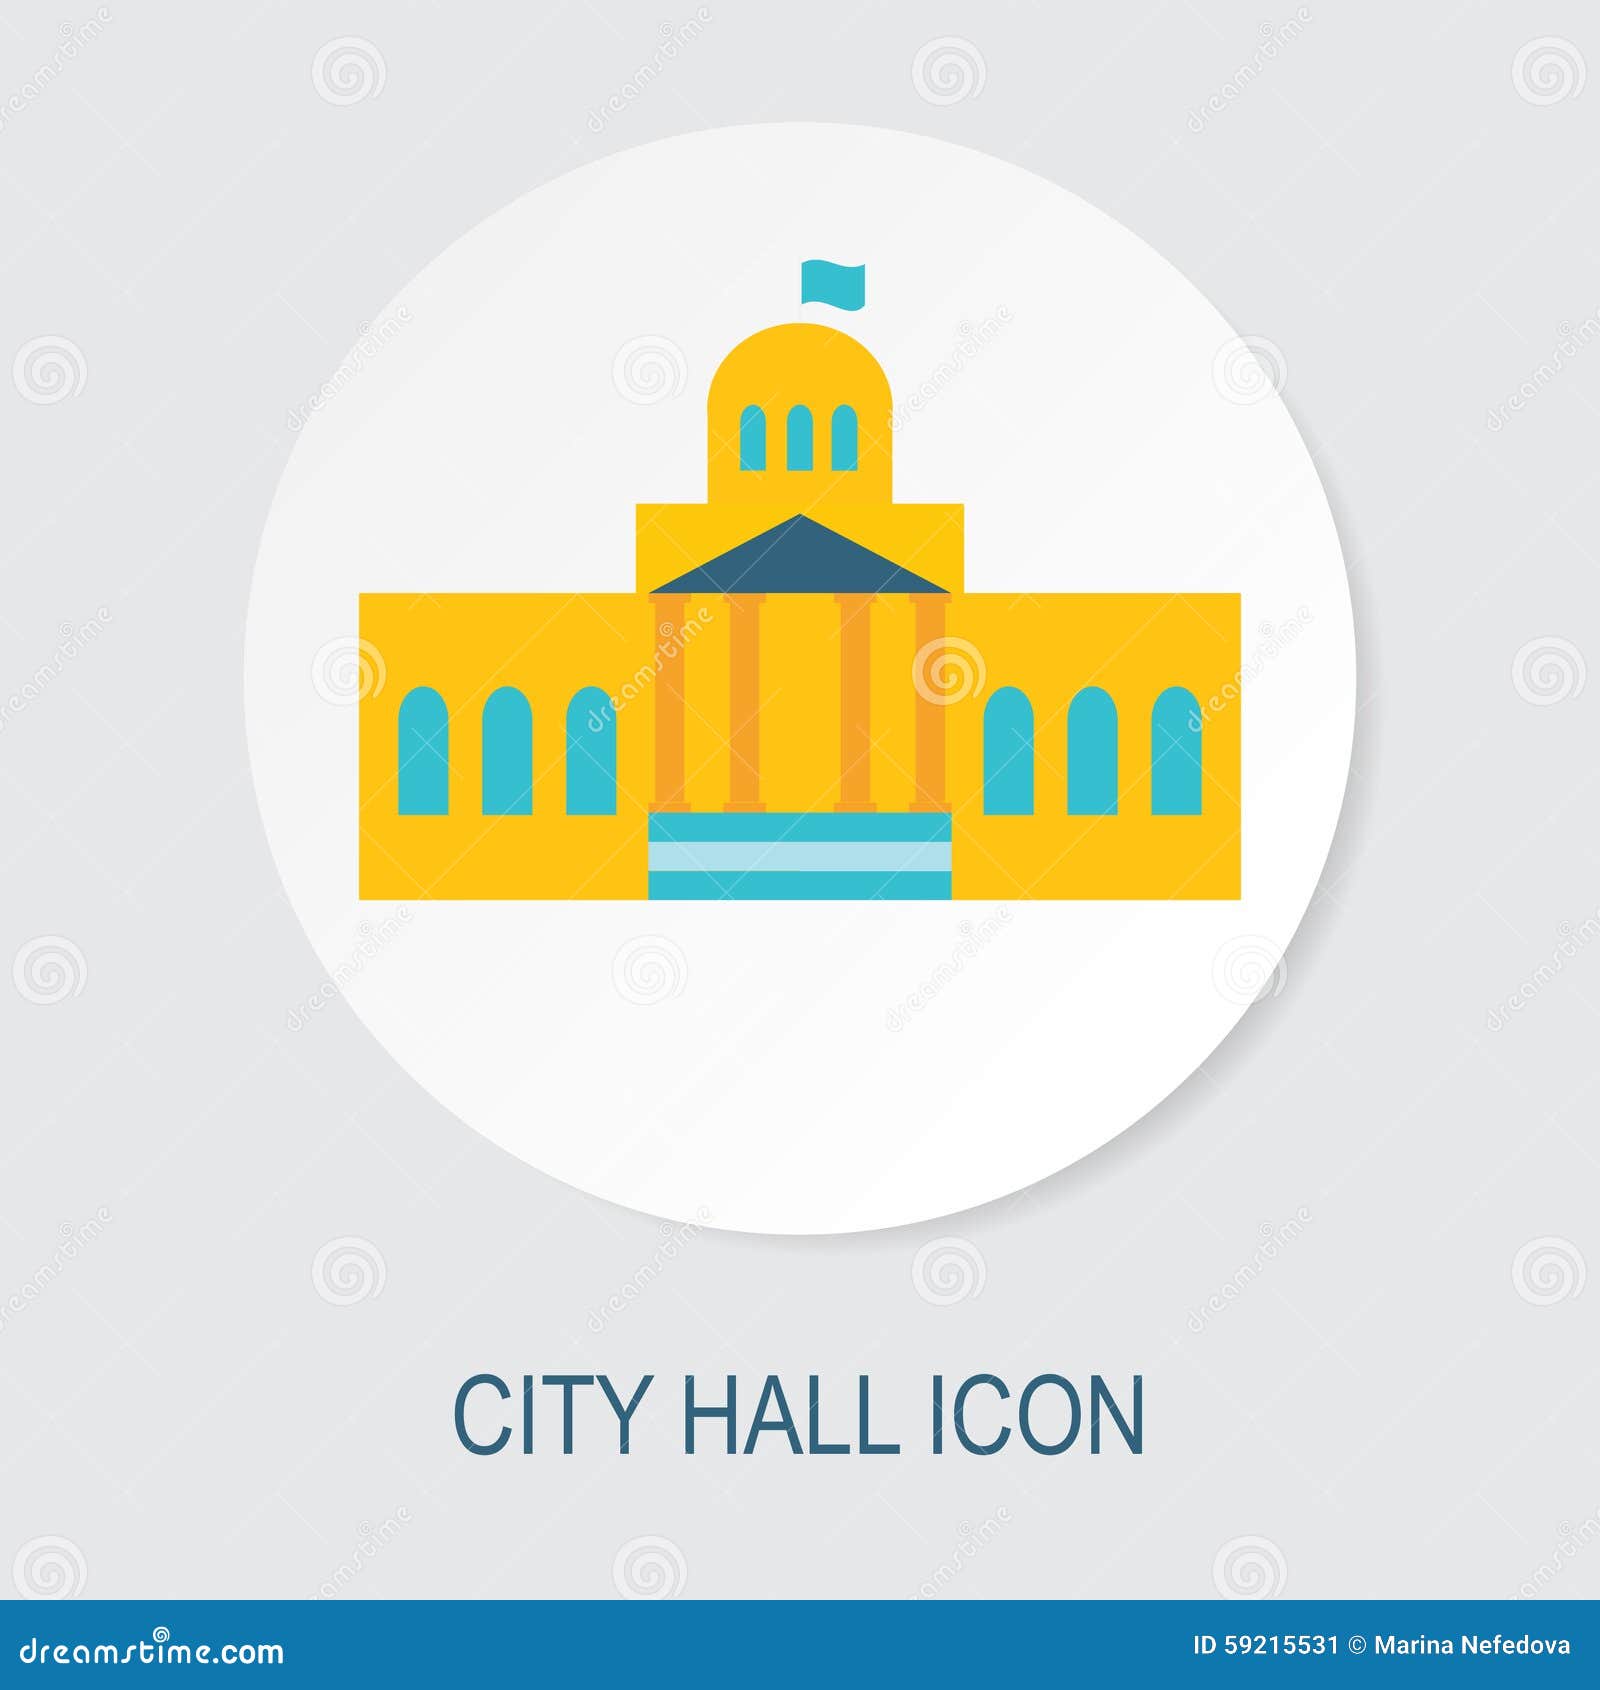 clipart city hall - photo #38